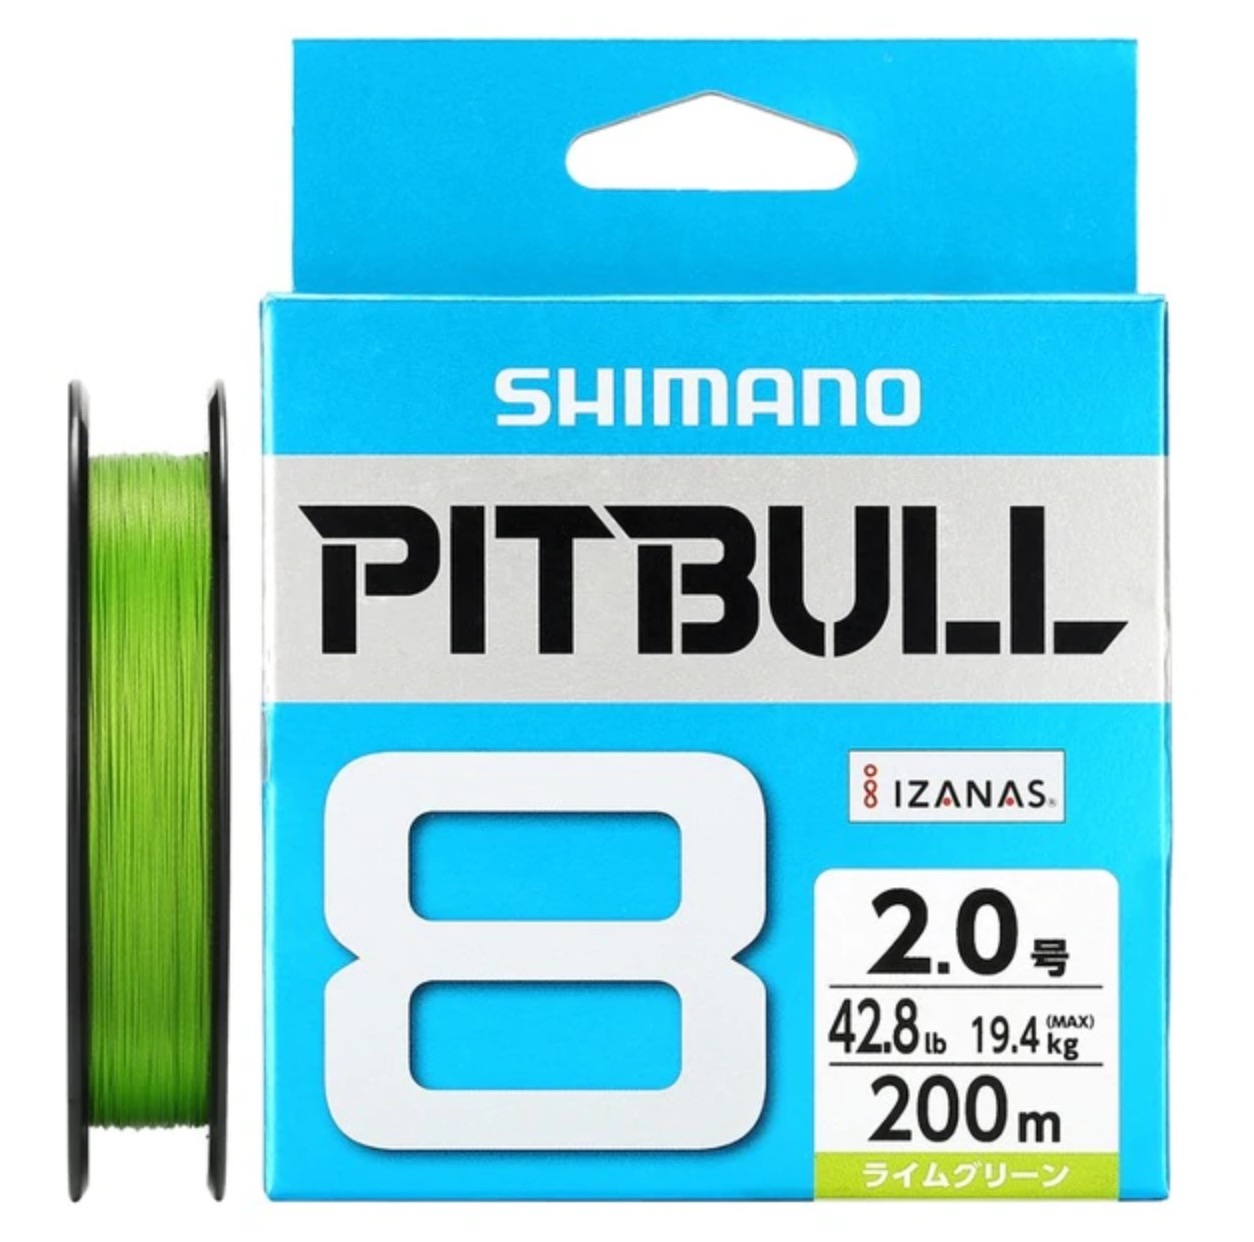 Shimano PE Line Pitbull 12 Main 200m Pl-m52r for sale online 